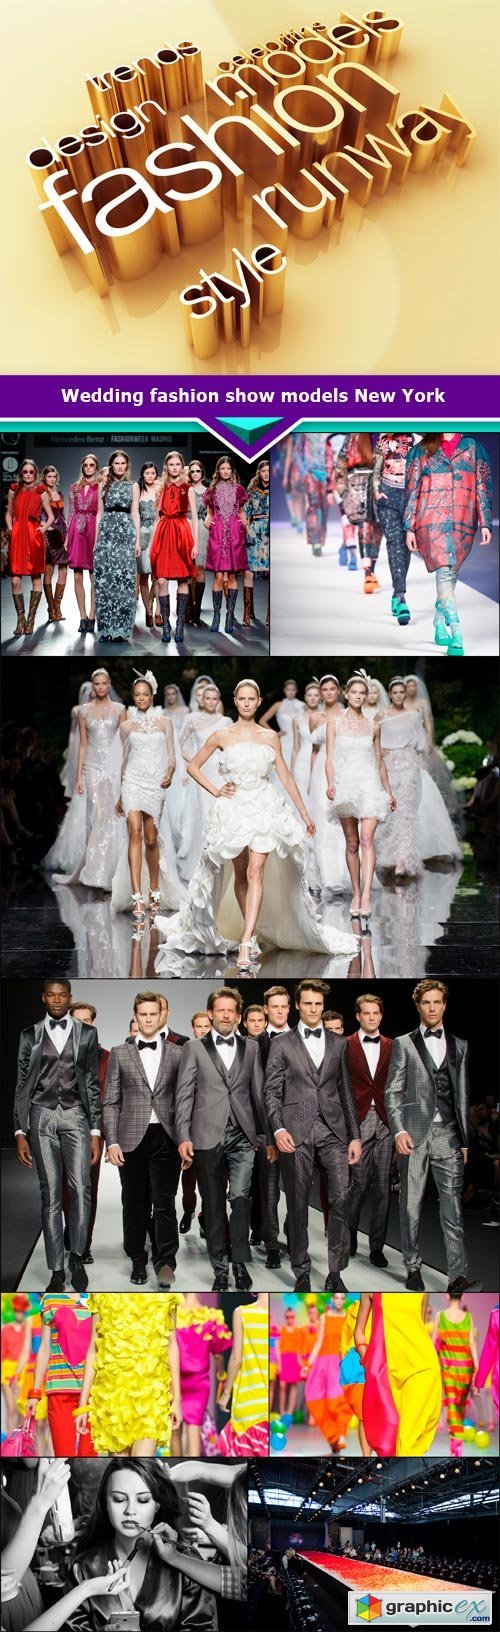 Wedding fashion show models New York 9x JPEG